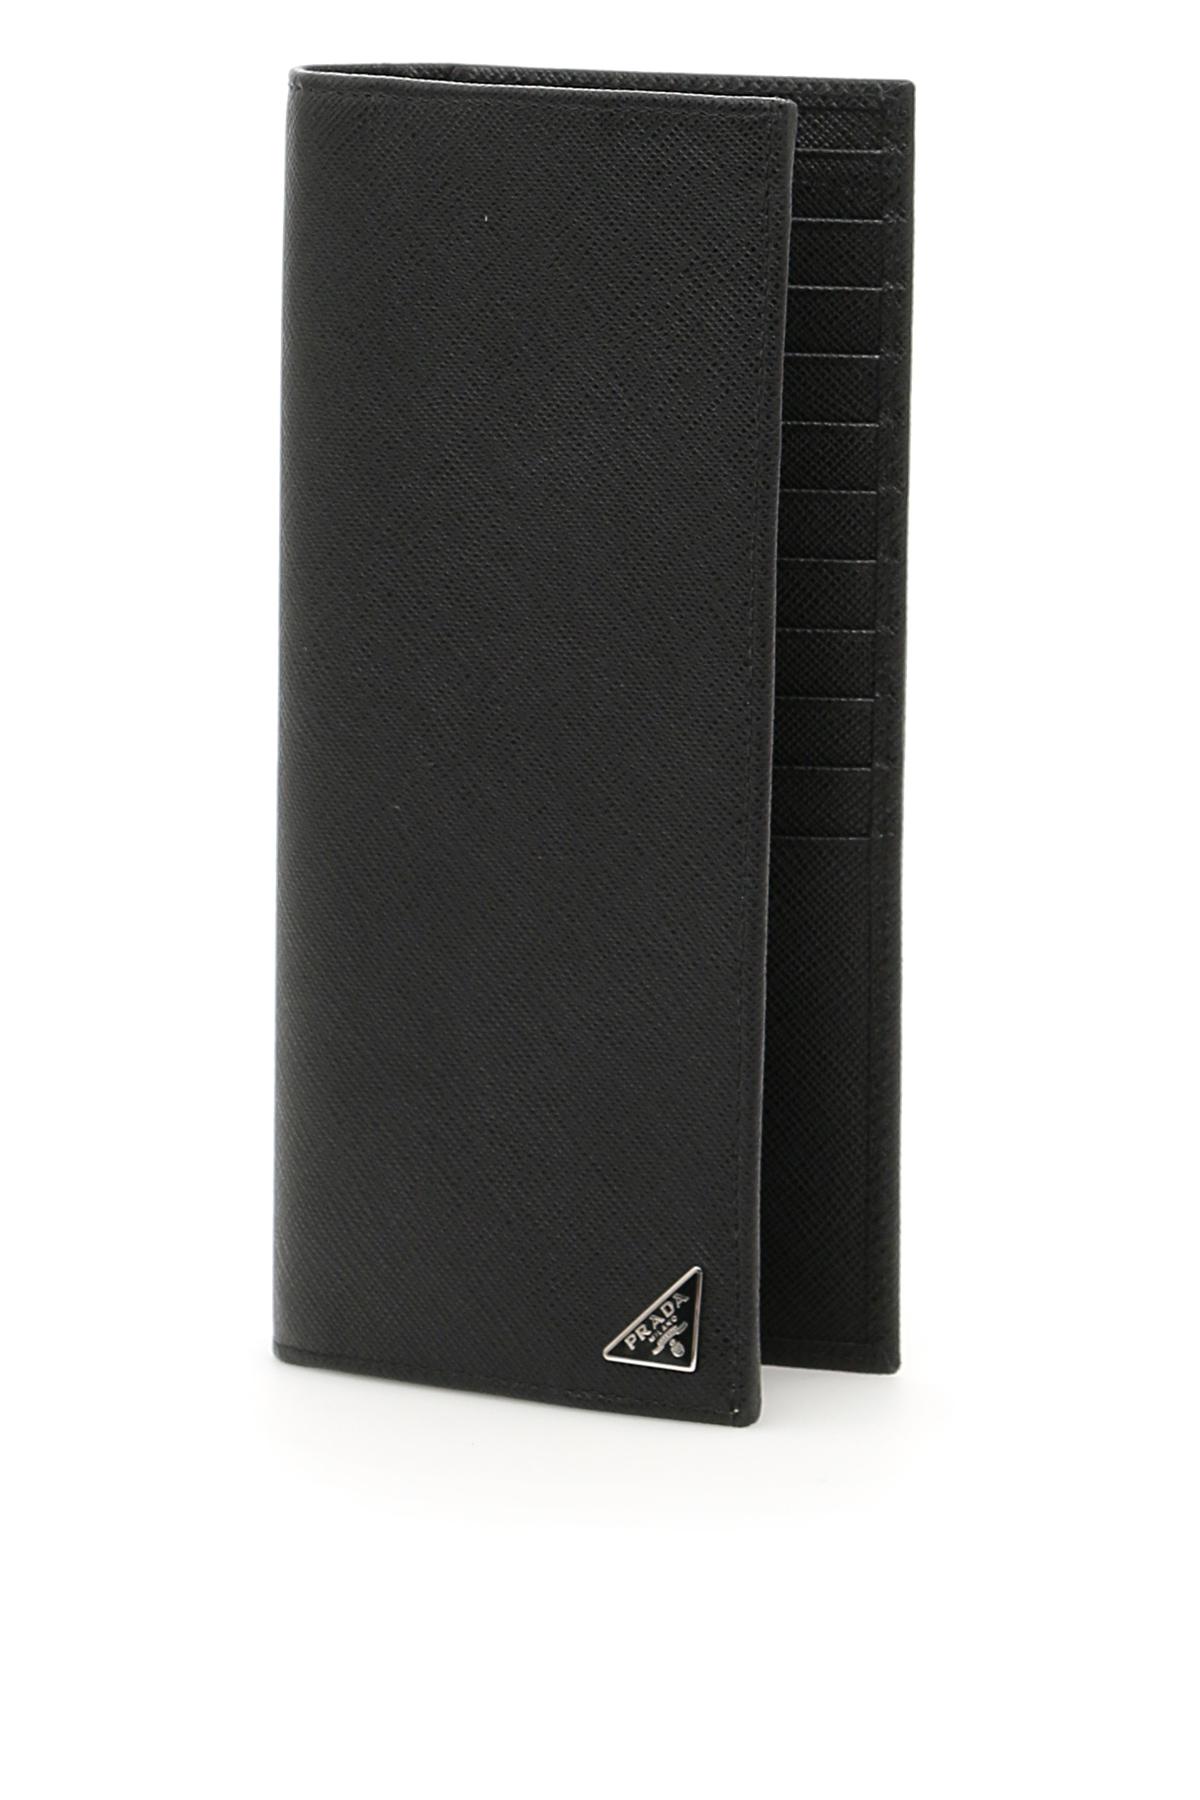 Prada Leather Vertical Wallet in Nero (Black) for Men - Lyst